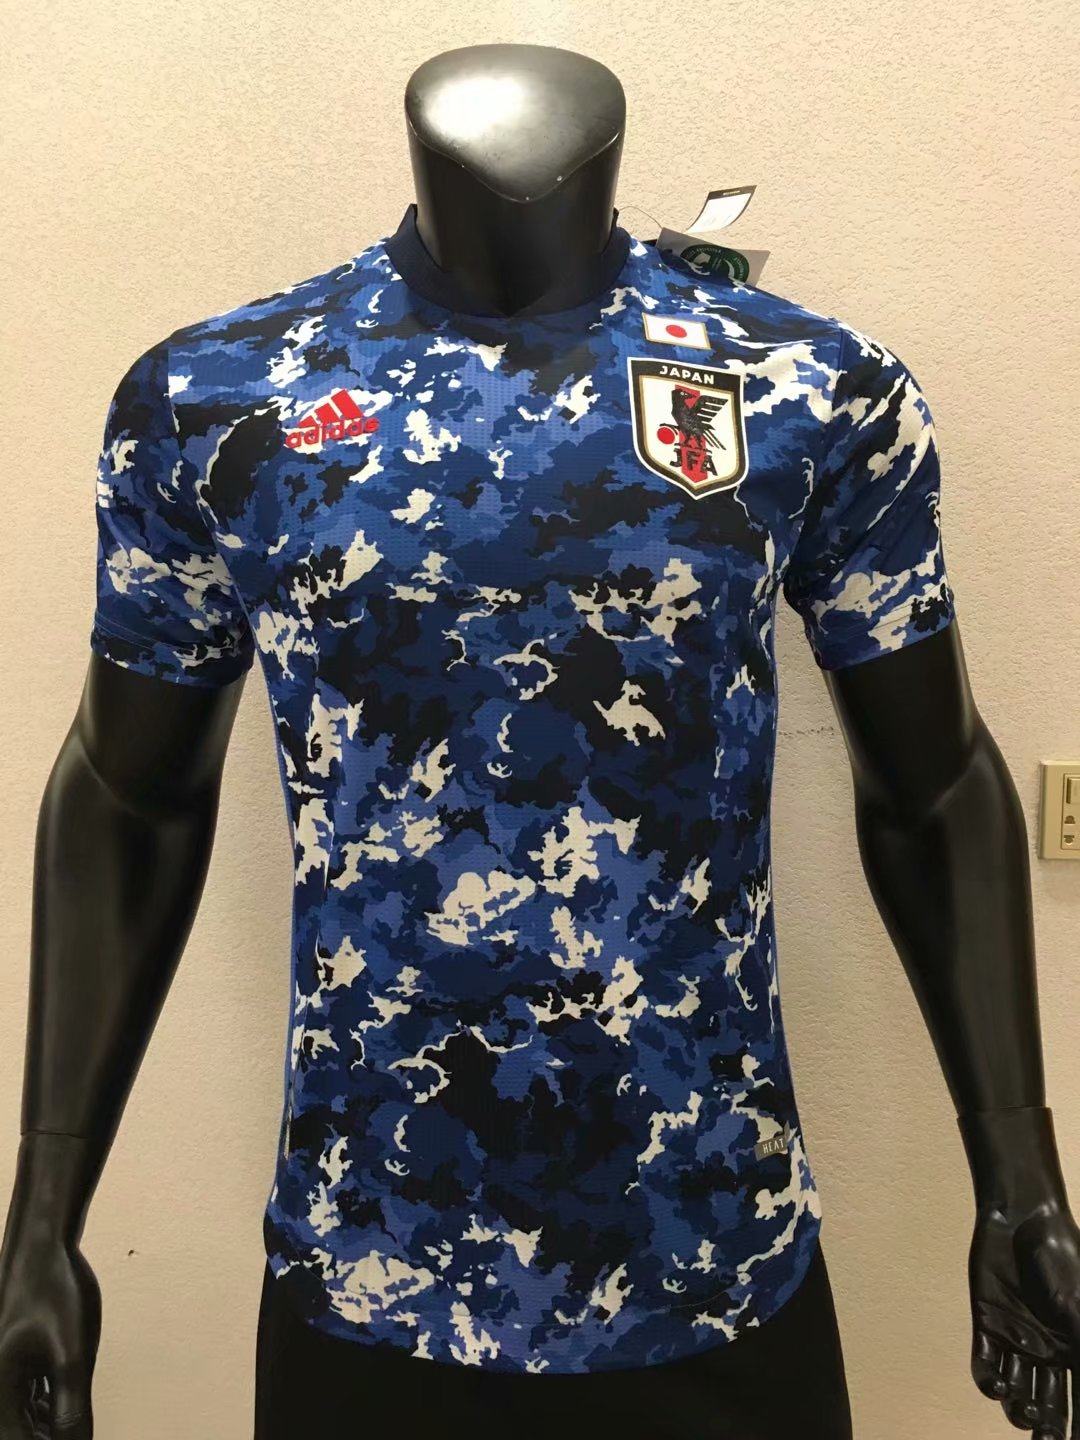 Japan national team 2020 season home jersey